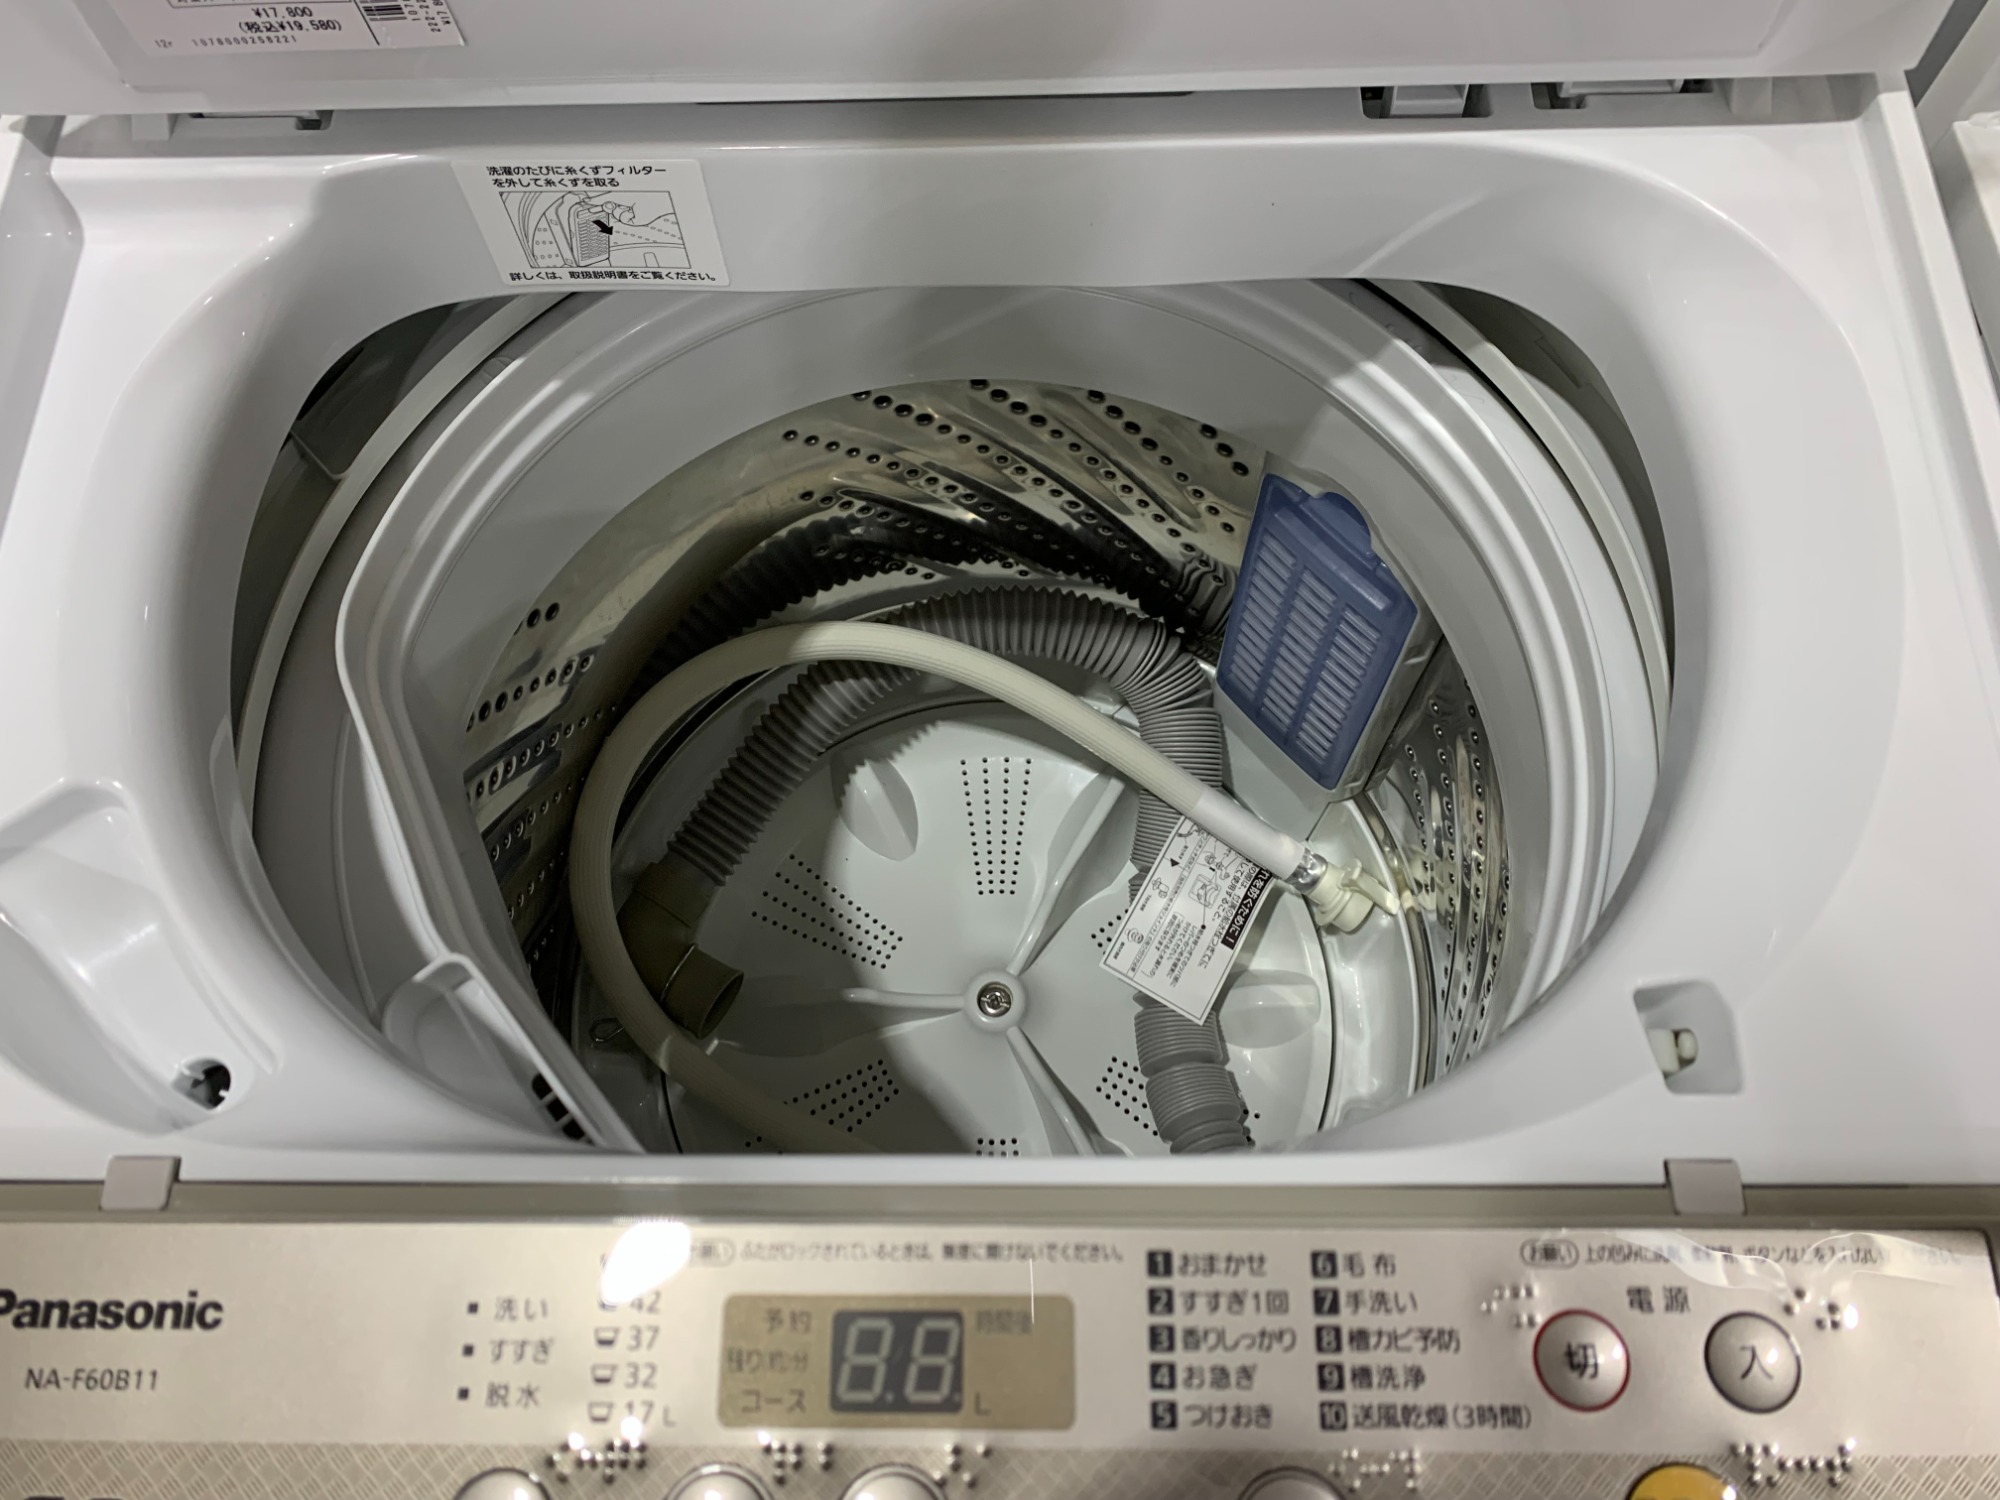 Panasonic 全自動電気洗濯機 NA-F60B11 - 洗濯機